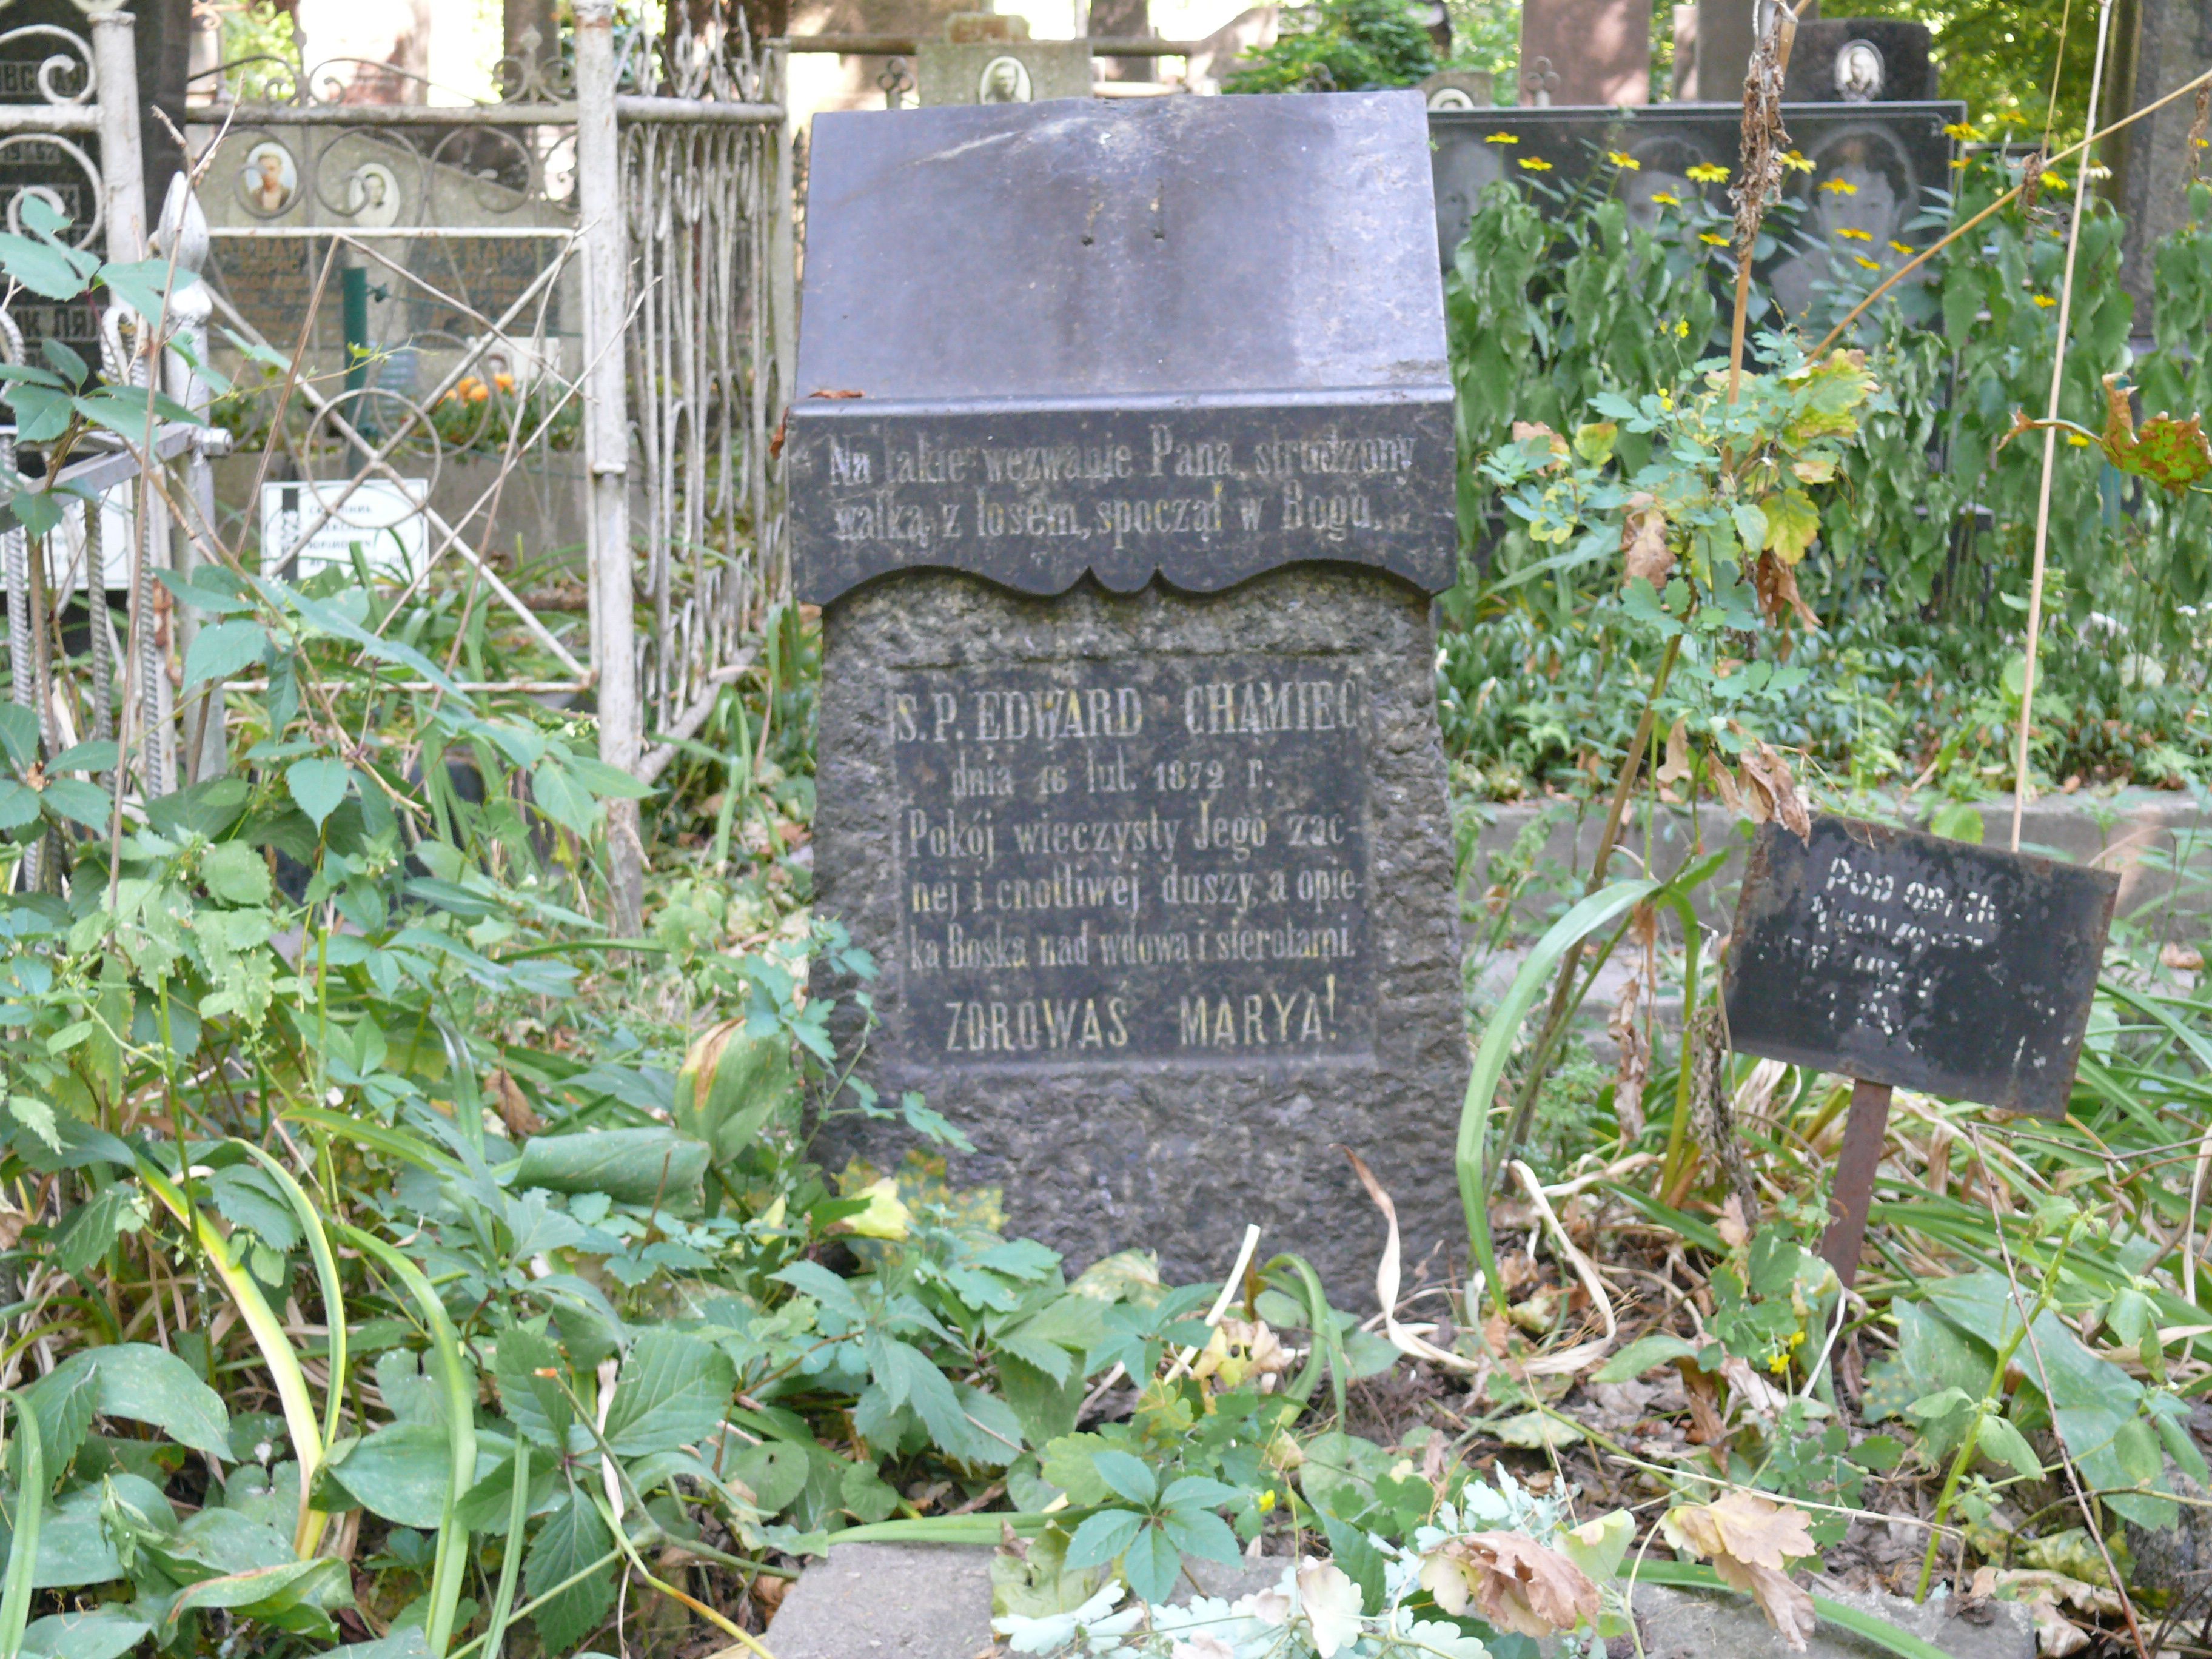 Tombstone of Edward Chamec